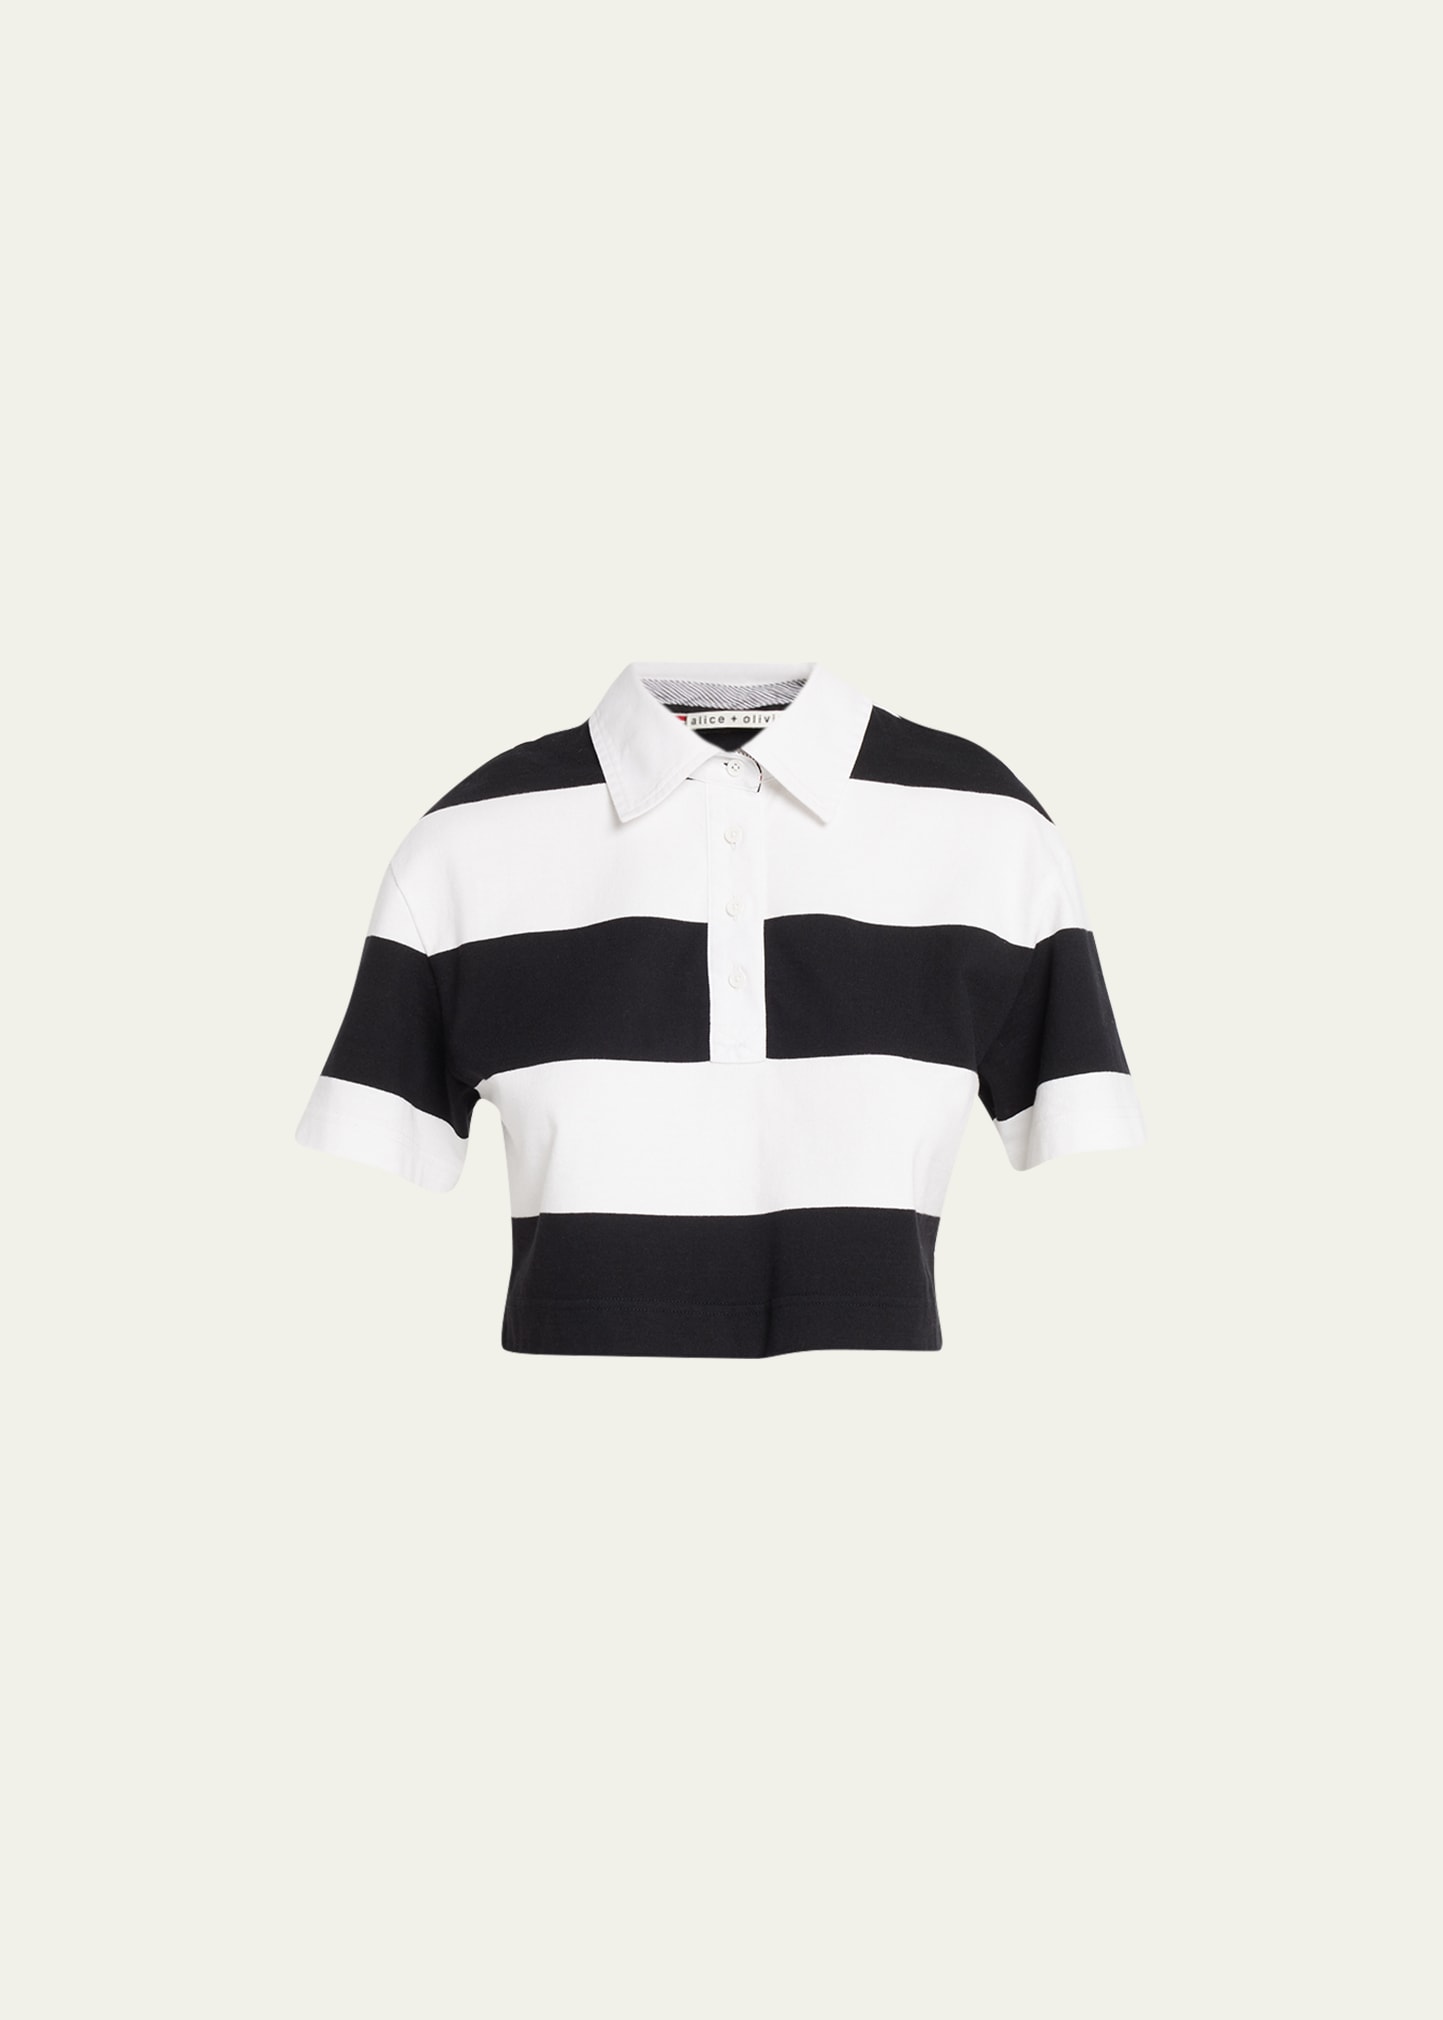 Alice And Olivia Treva Cropped Polo Shirt In Black/ White | ModeSens